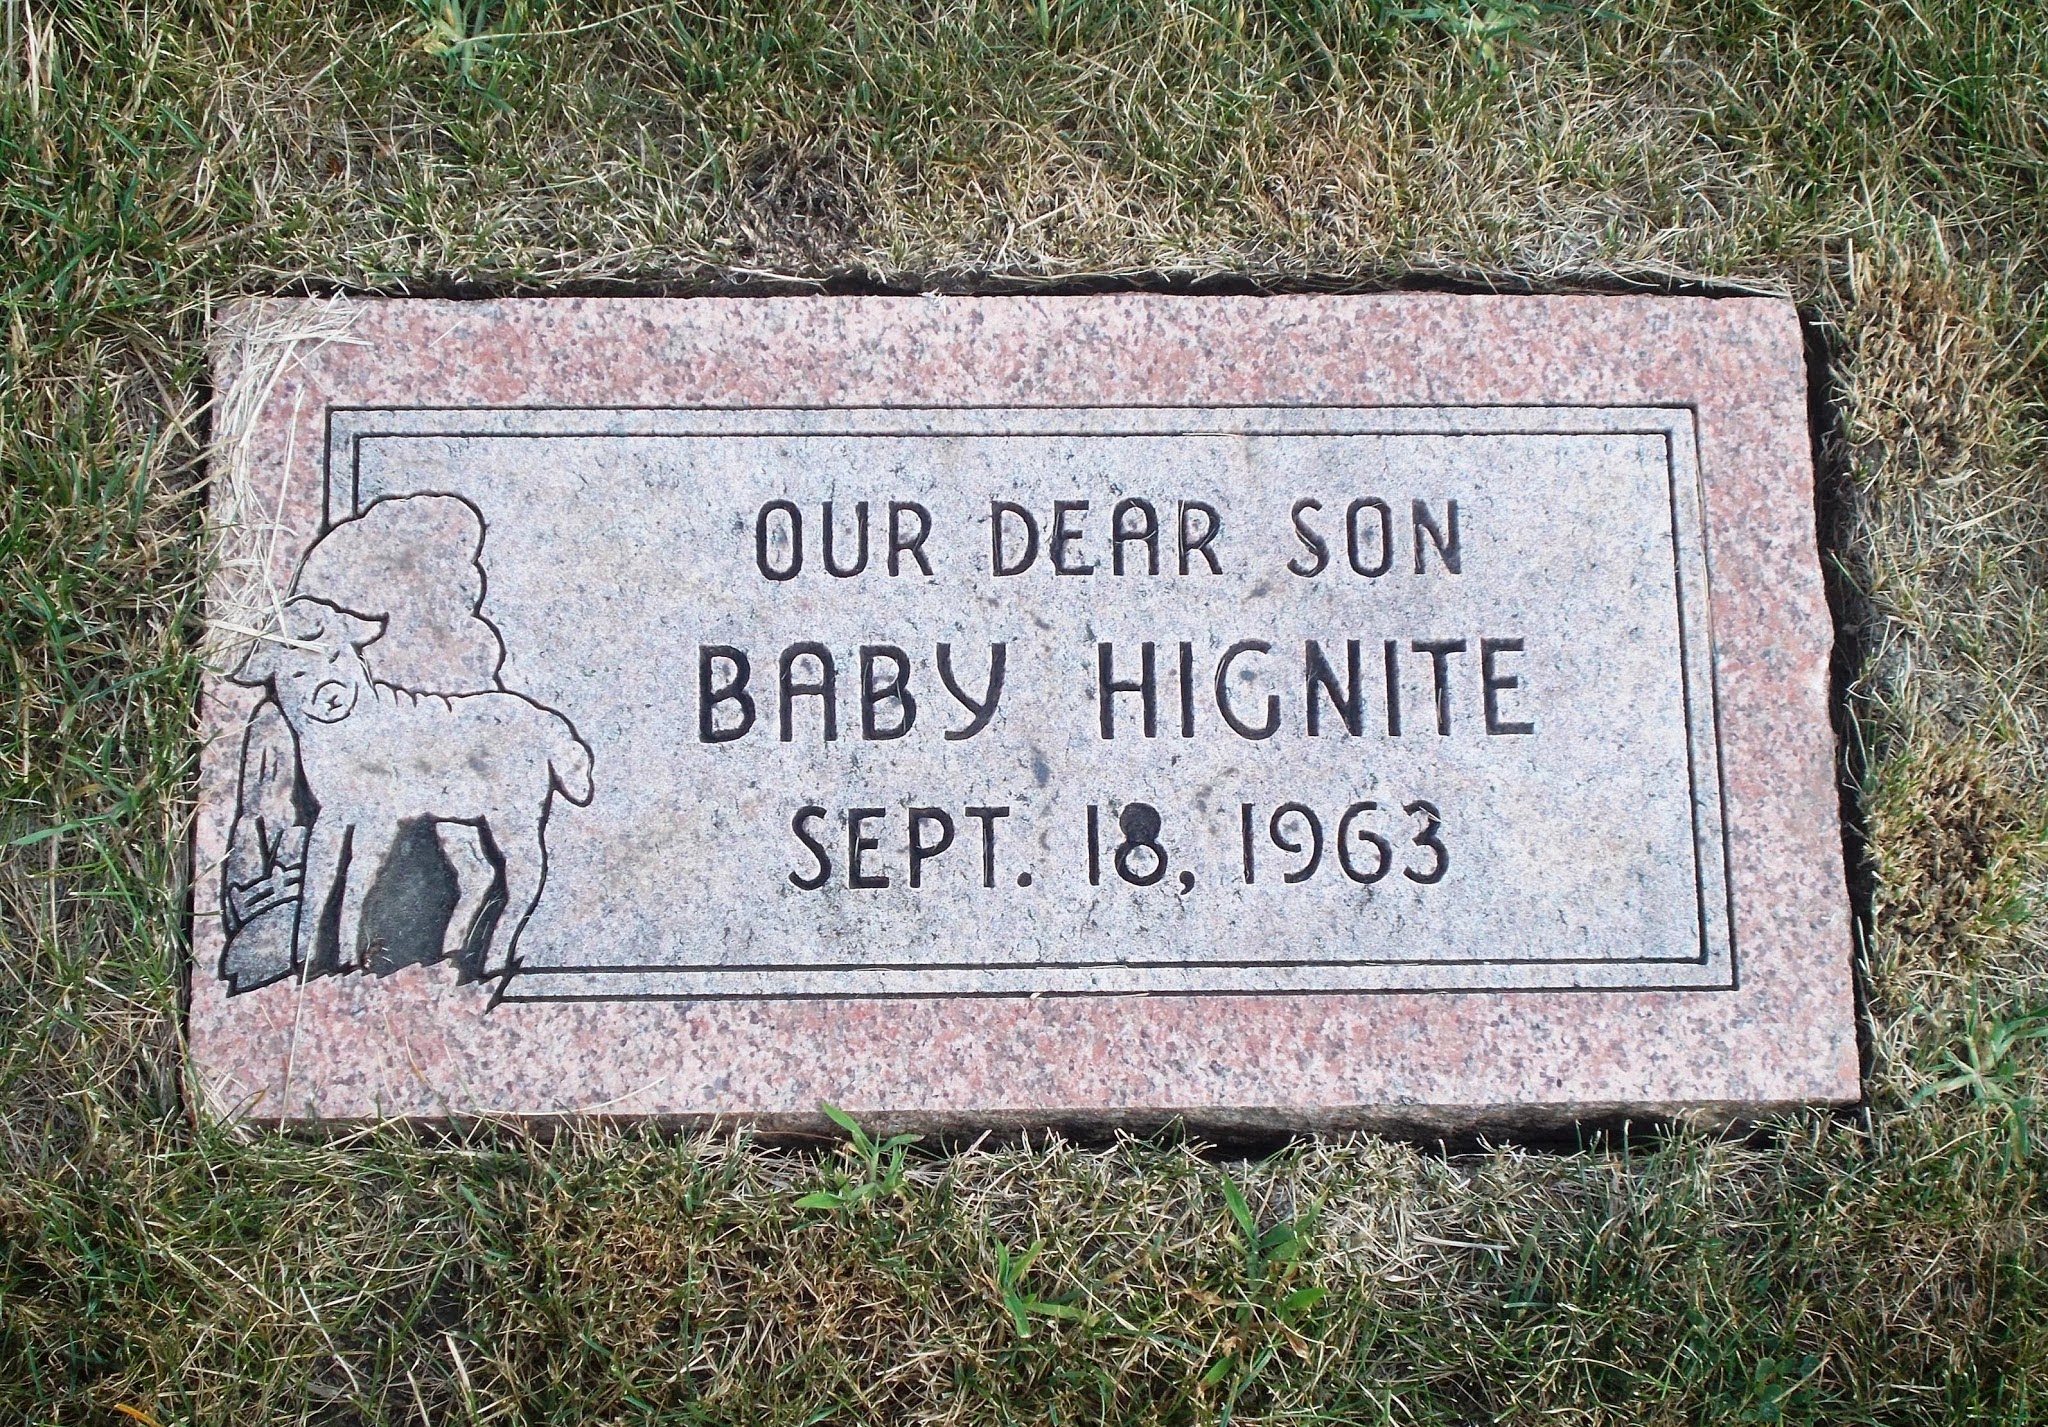 Baby Hignite